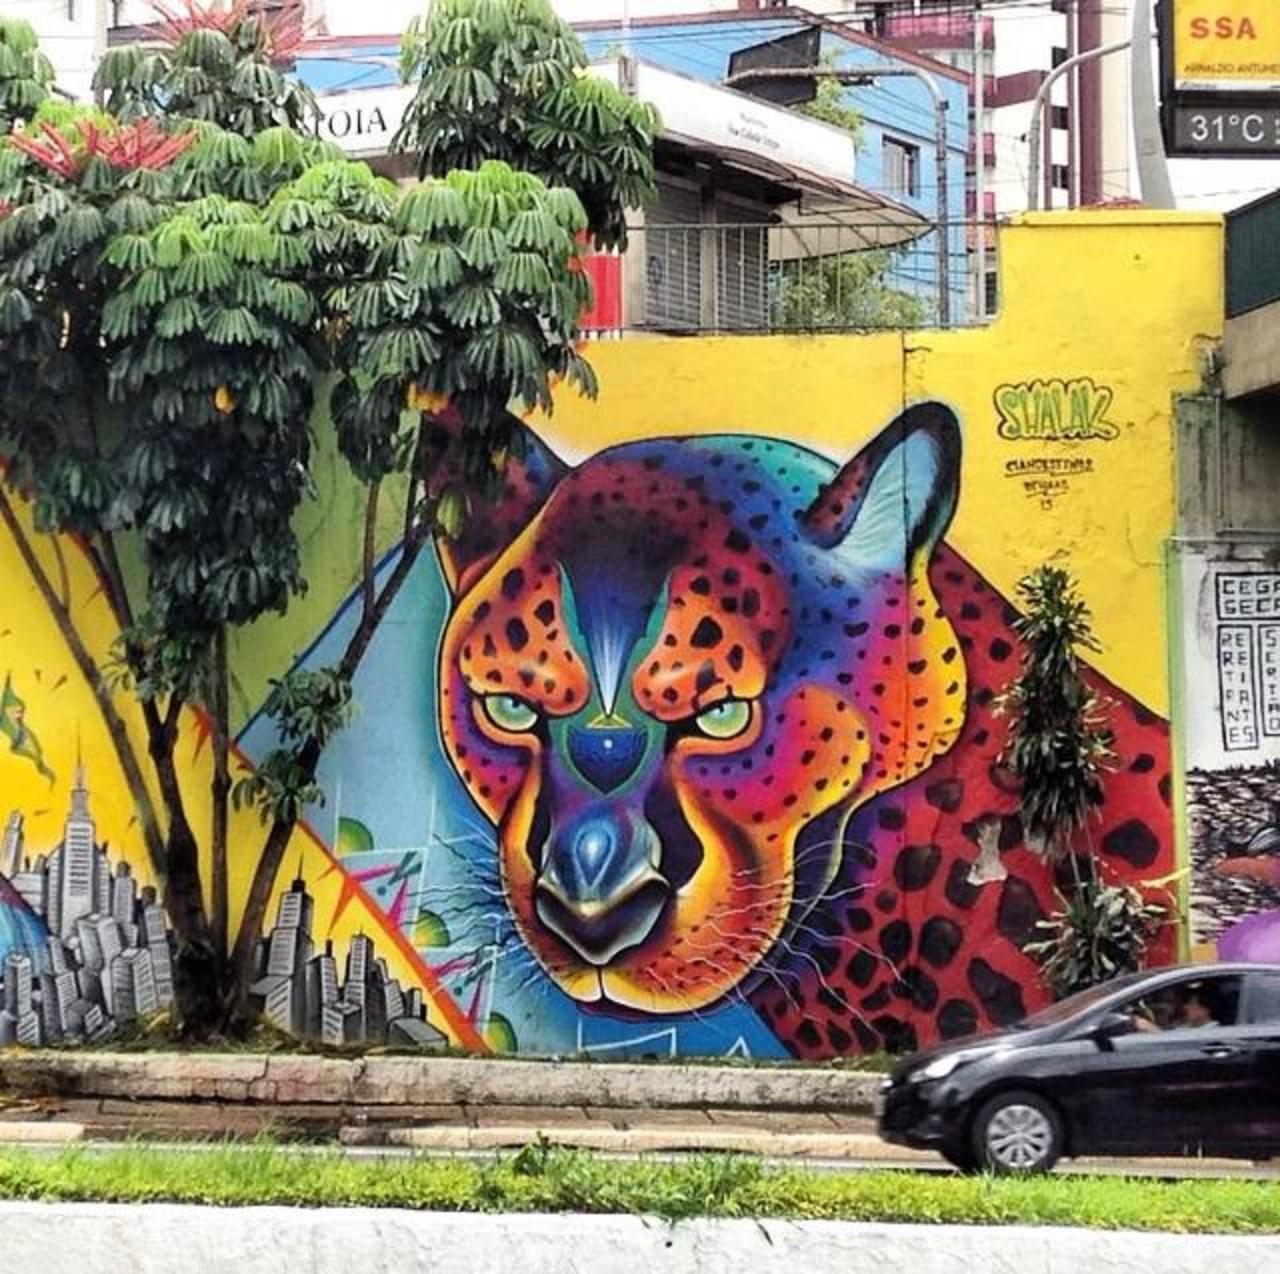 Artist ShalakAttack beautiful & colourful nature in Street Art piece in São Paulo 

#art #graffiti #mural #streetart http://t.co/Vguw41phpq